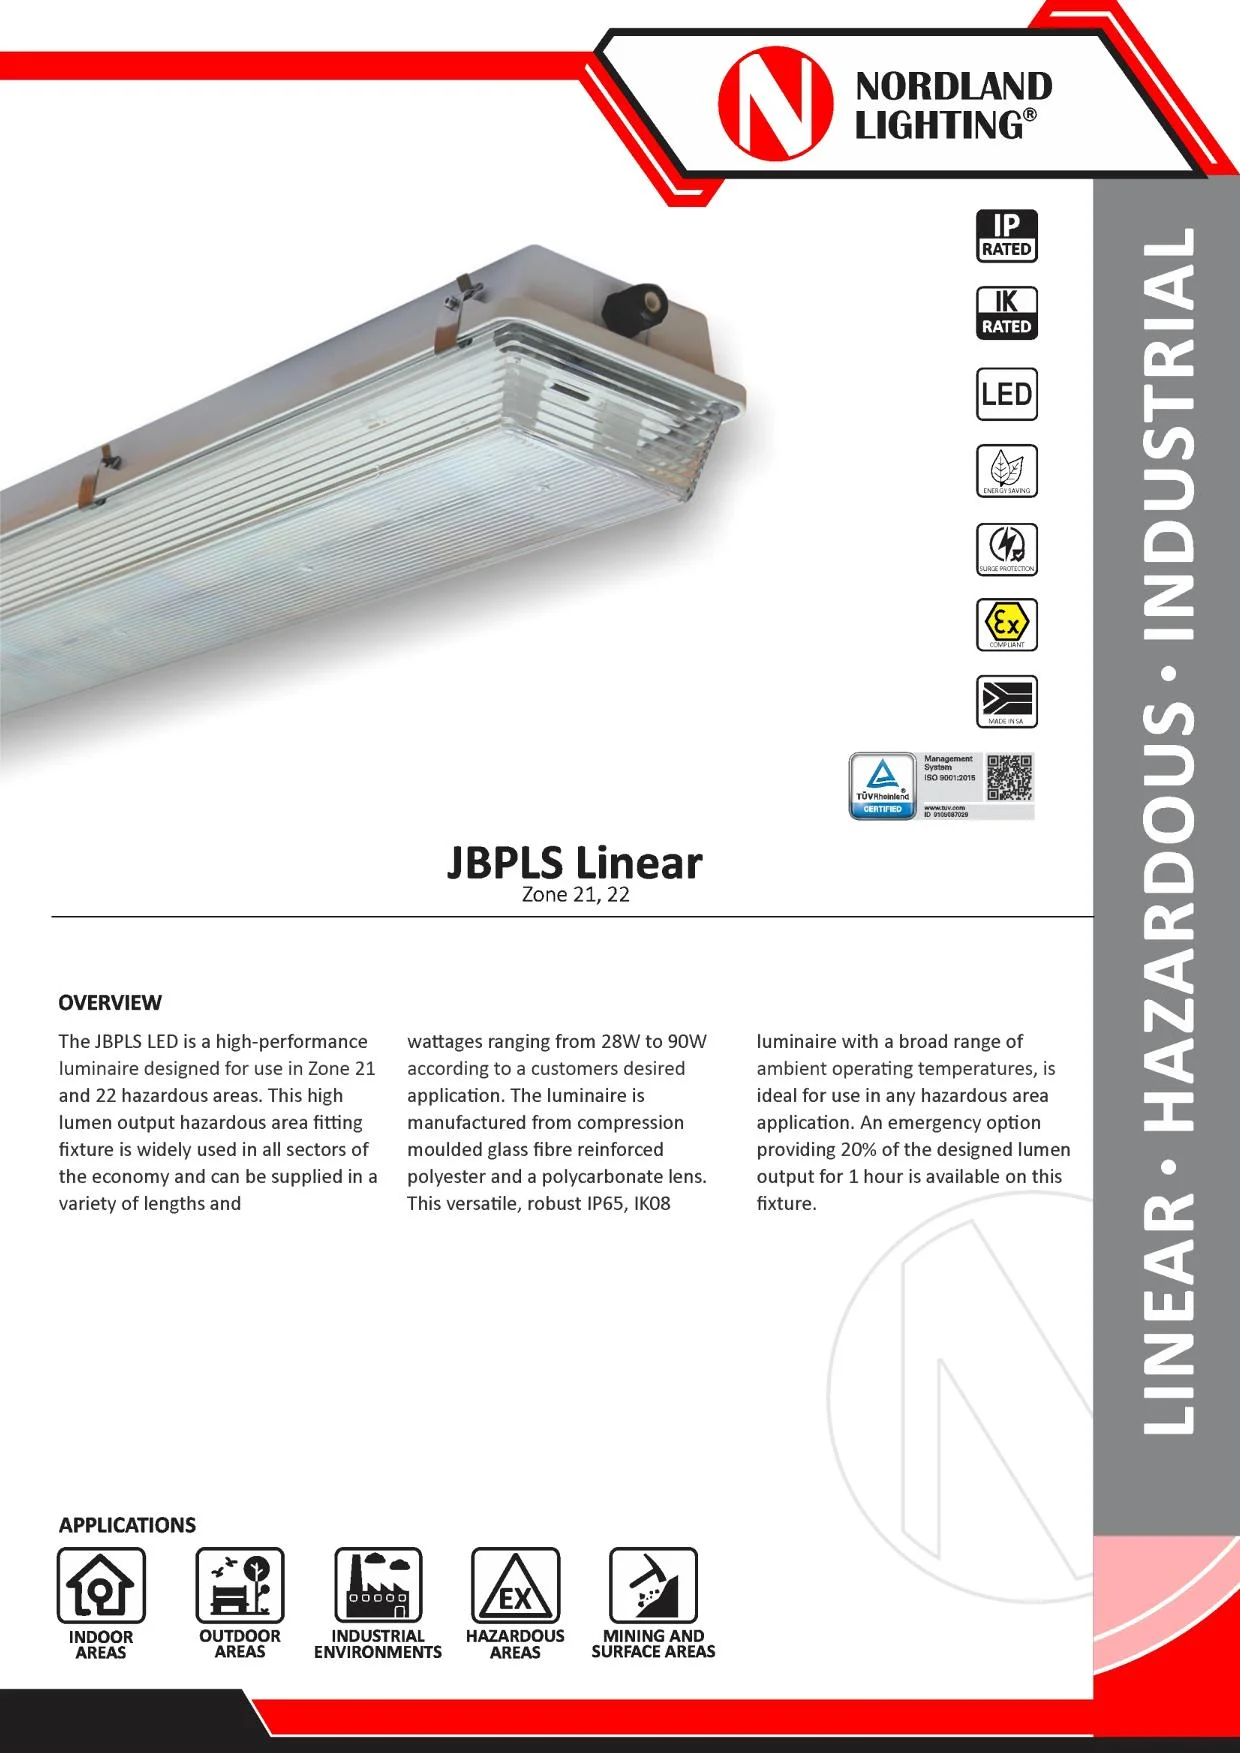 NL22 Nordland JBPLS Zone21+22 Linear Luminaire